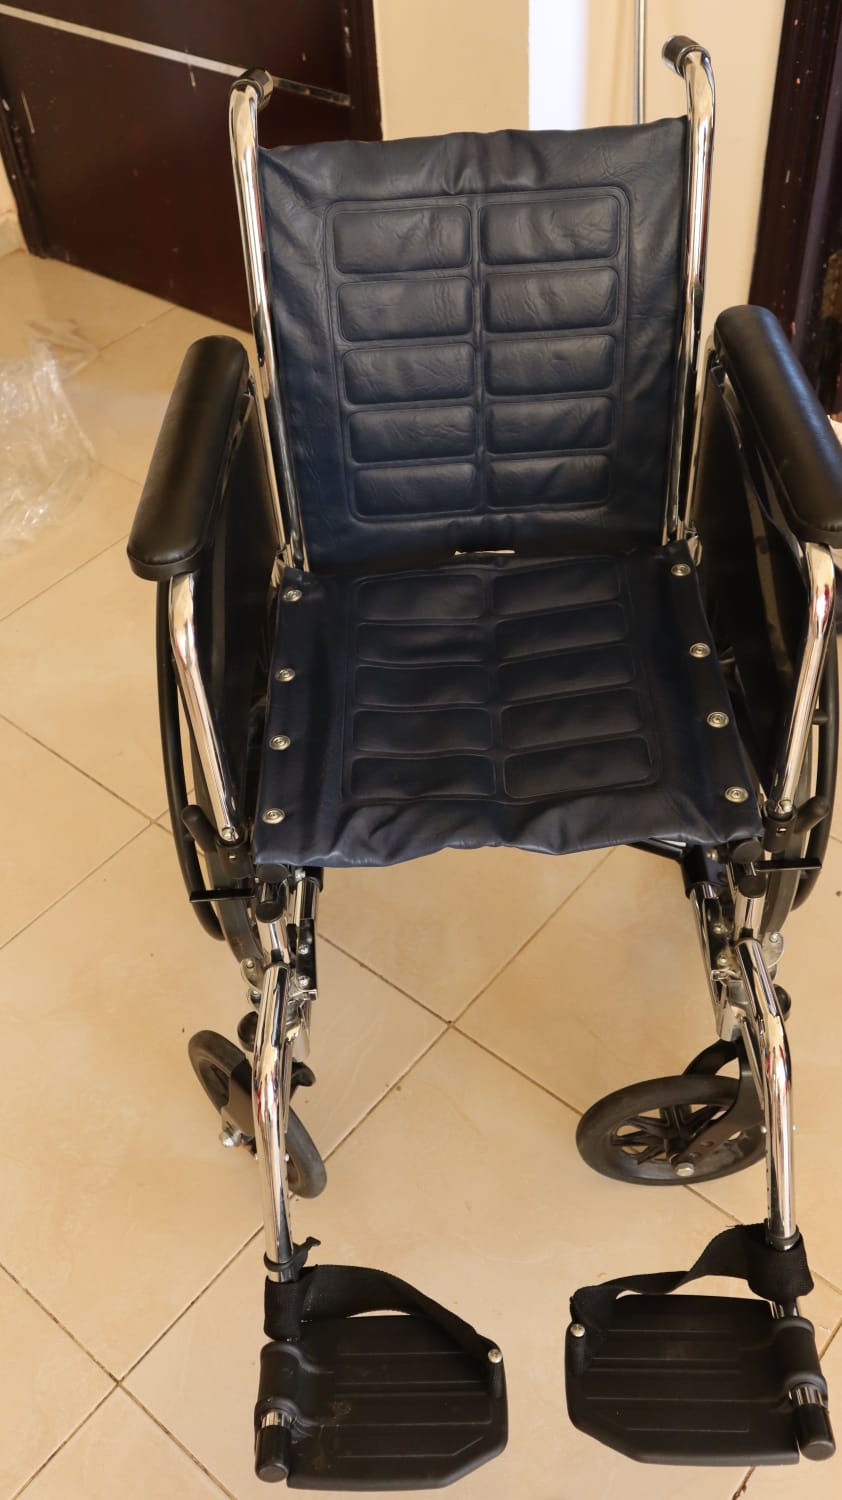 Invacare Wheelchair Tracer EX2 